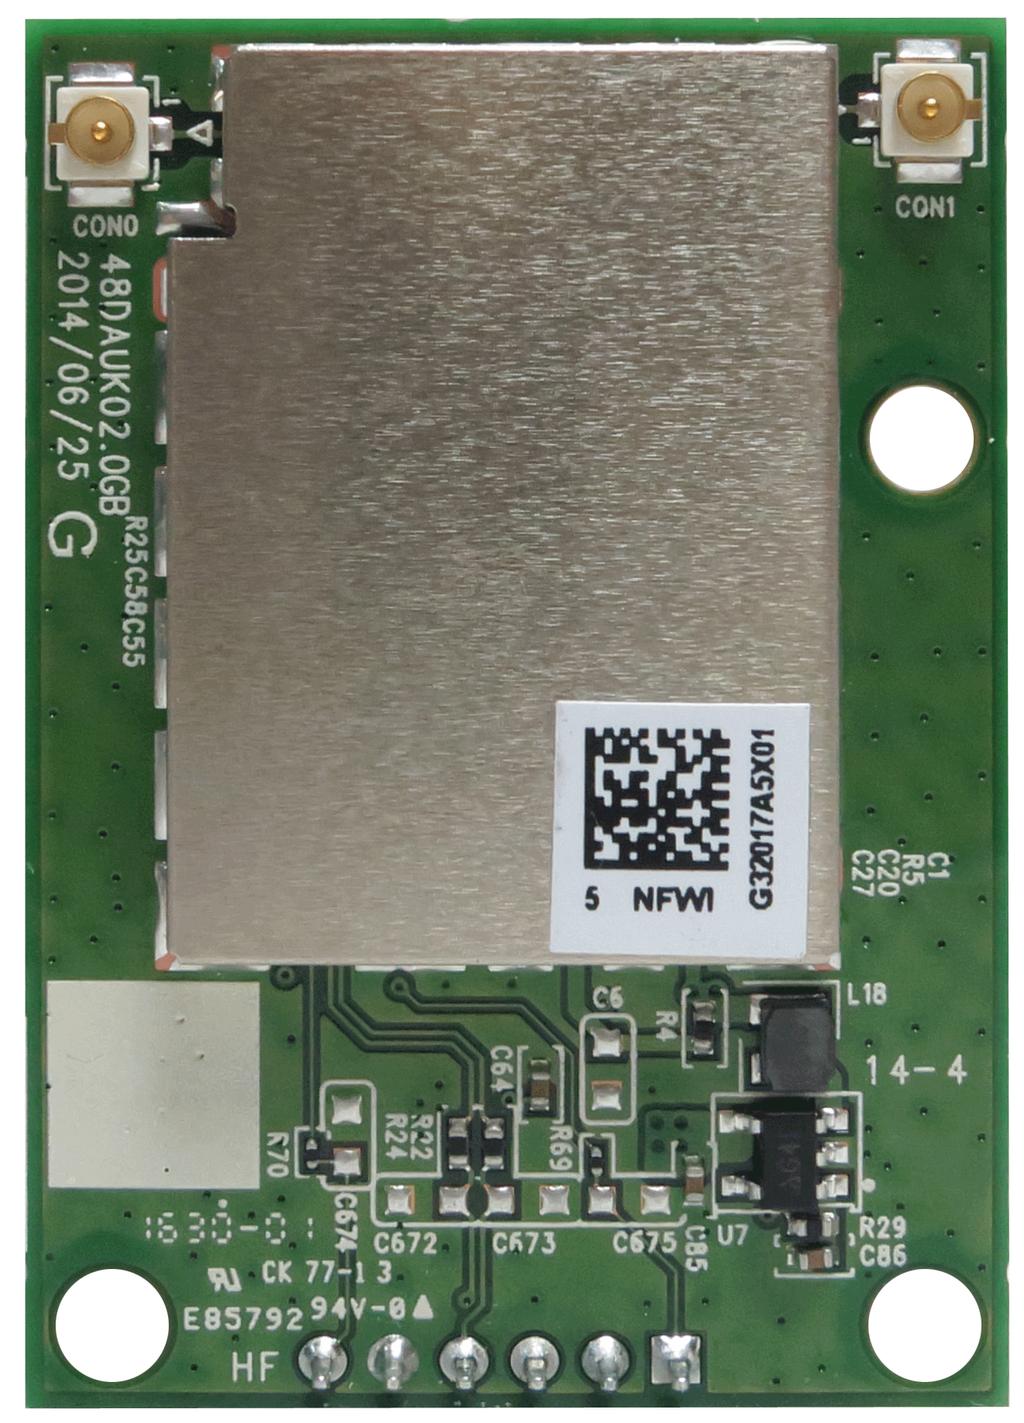 DAUK-W8812 Speciﬁca on 802.11 ac/a/b/g/n dual-band wiﬁ 2x2 USB module, RTL8812AU-VS Overview: DAUK-W8812 is an 802.11 ac/a/b/g/n dual-band wiﬁ 2x2 MIMO module in USB 6-pin headers interface.